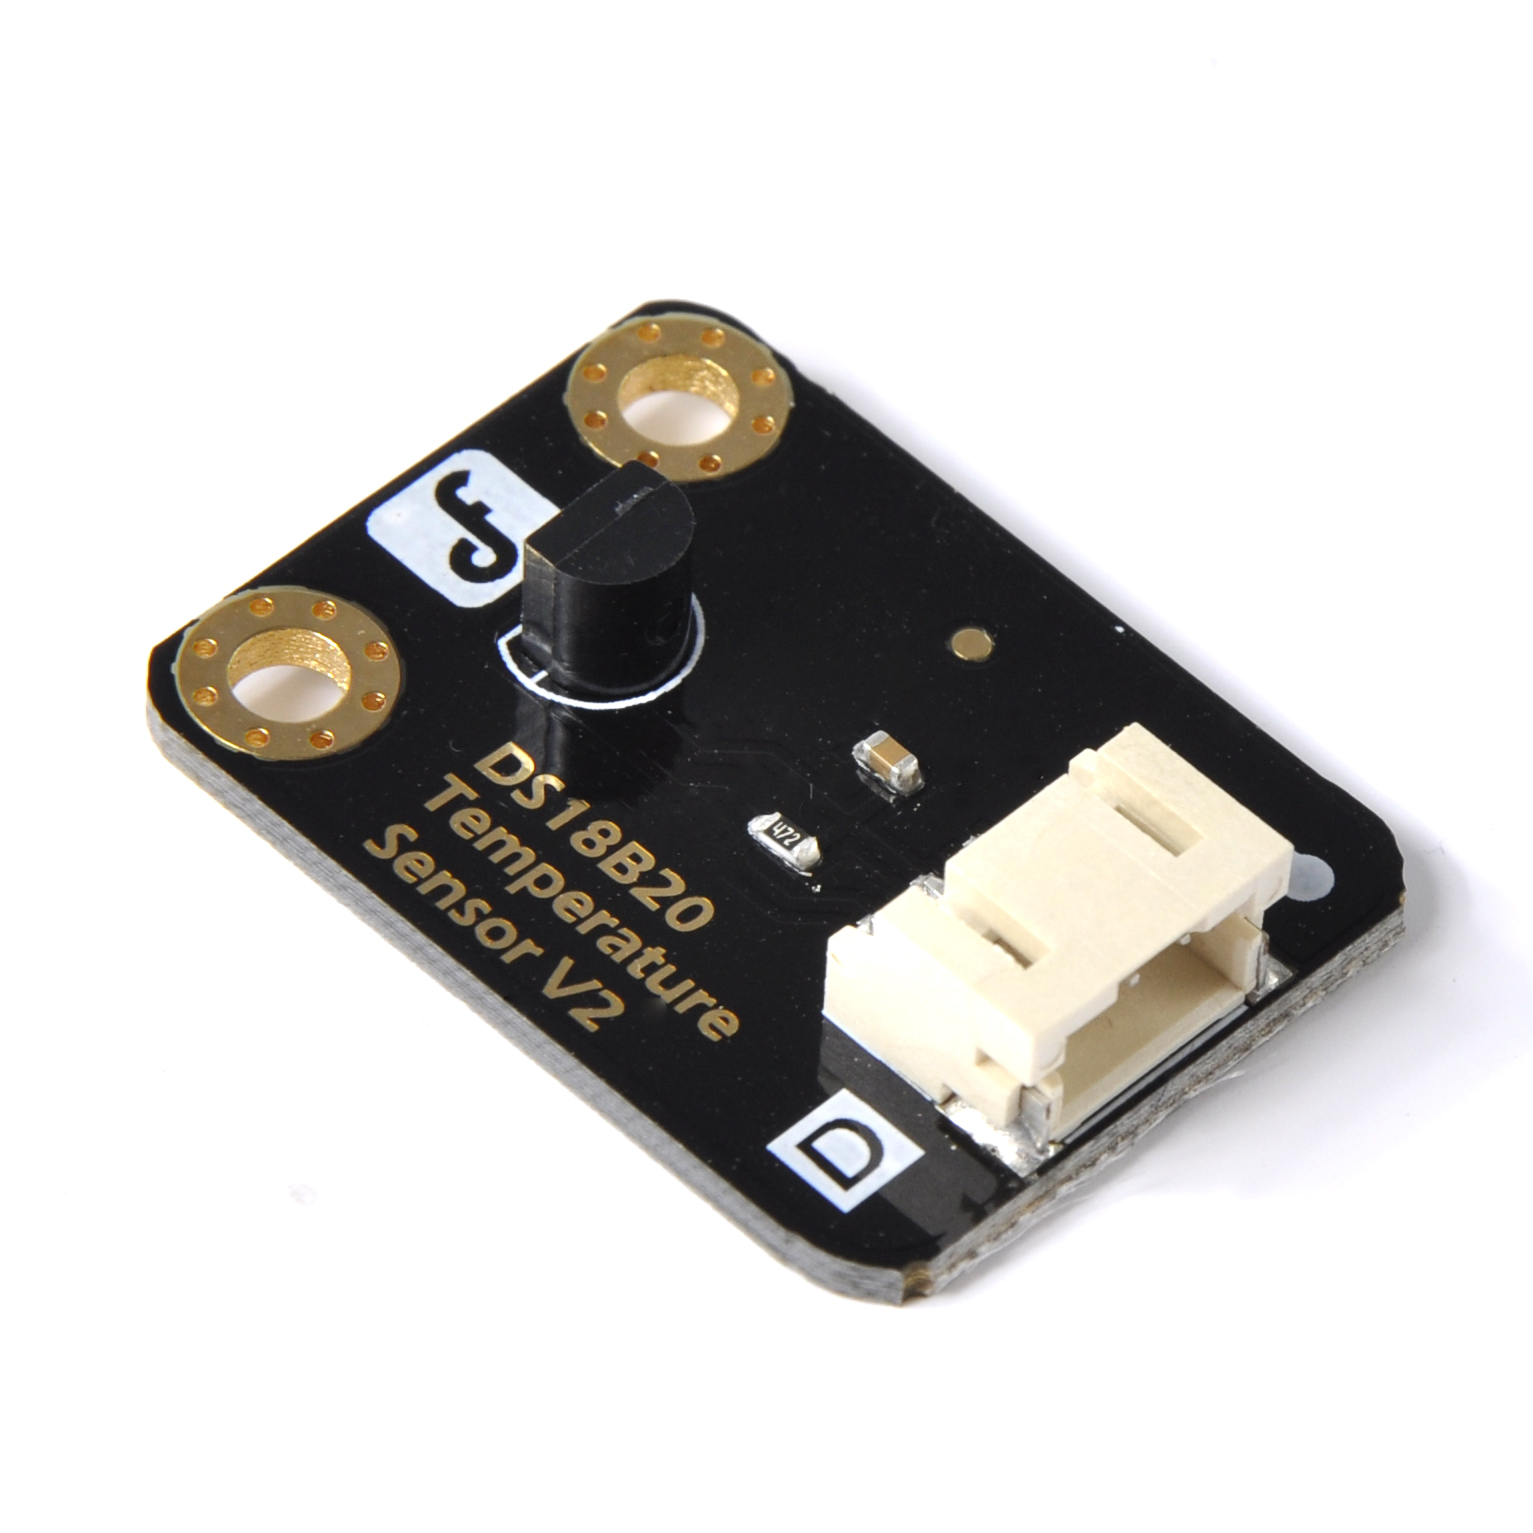 Neu Ds18b20 Thermometer Temperature Sensor Probe Module For Arduino Raspberry Pi 